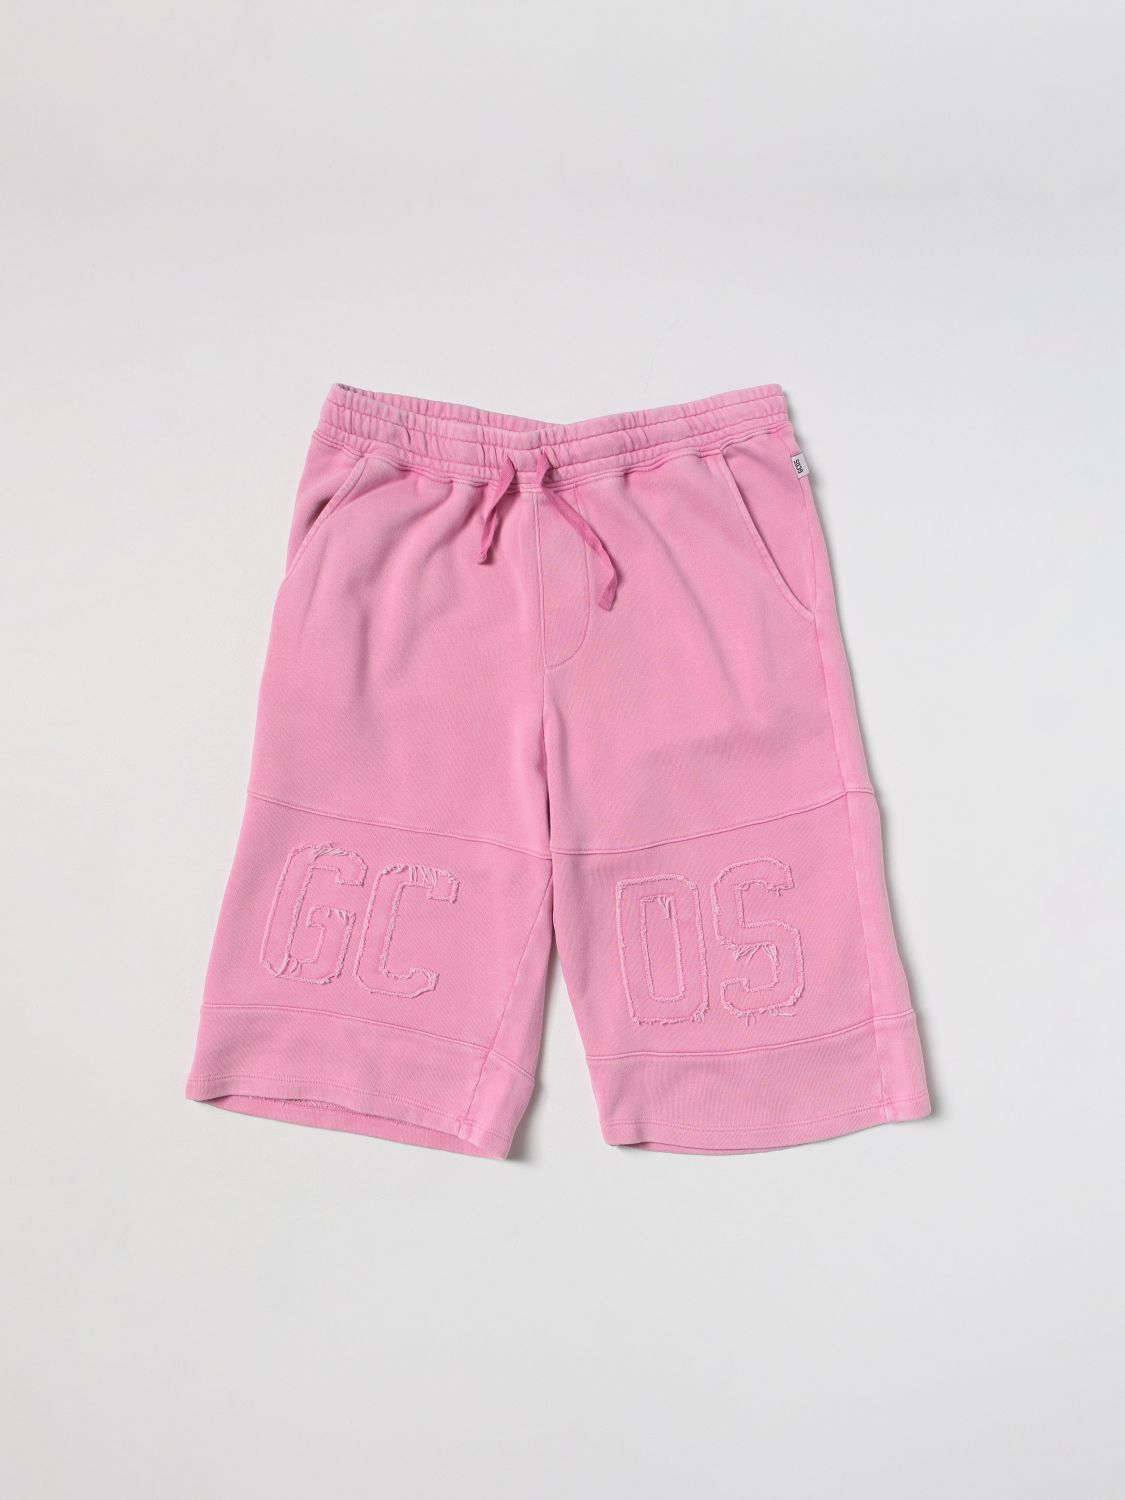 Gcds Shorts  Kids Kids Color Pink